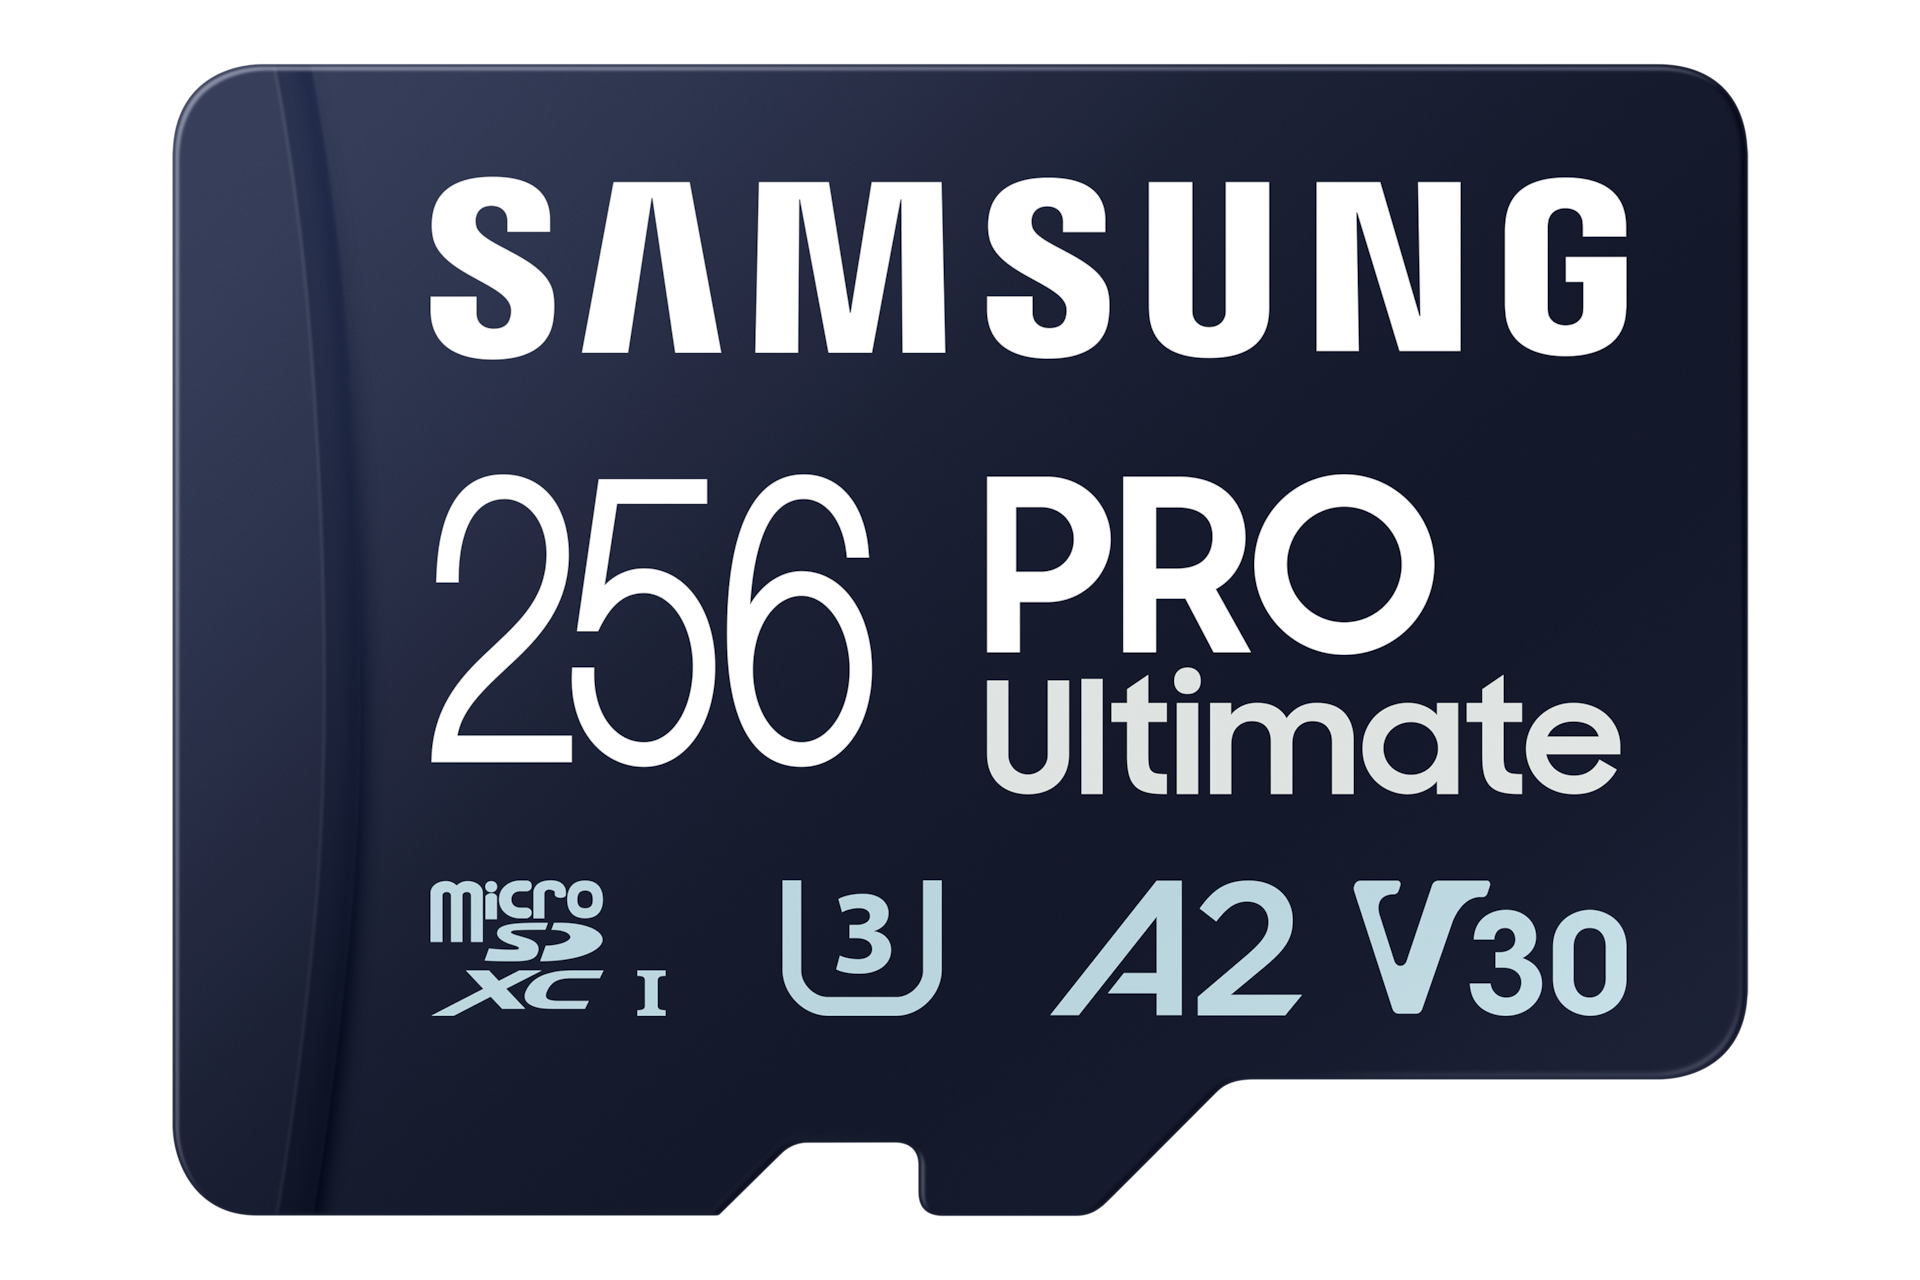 PRO Ultimate microSD Card